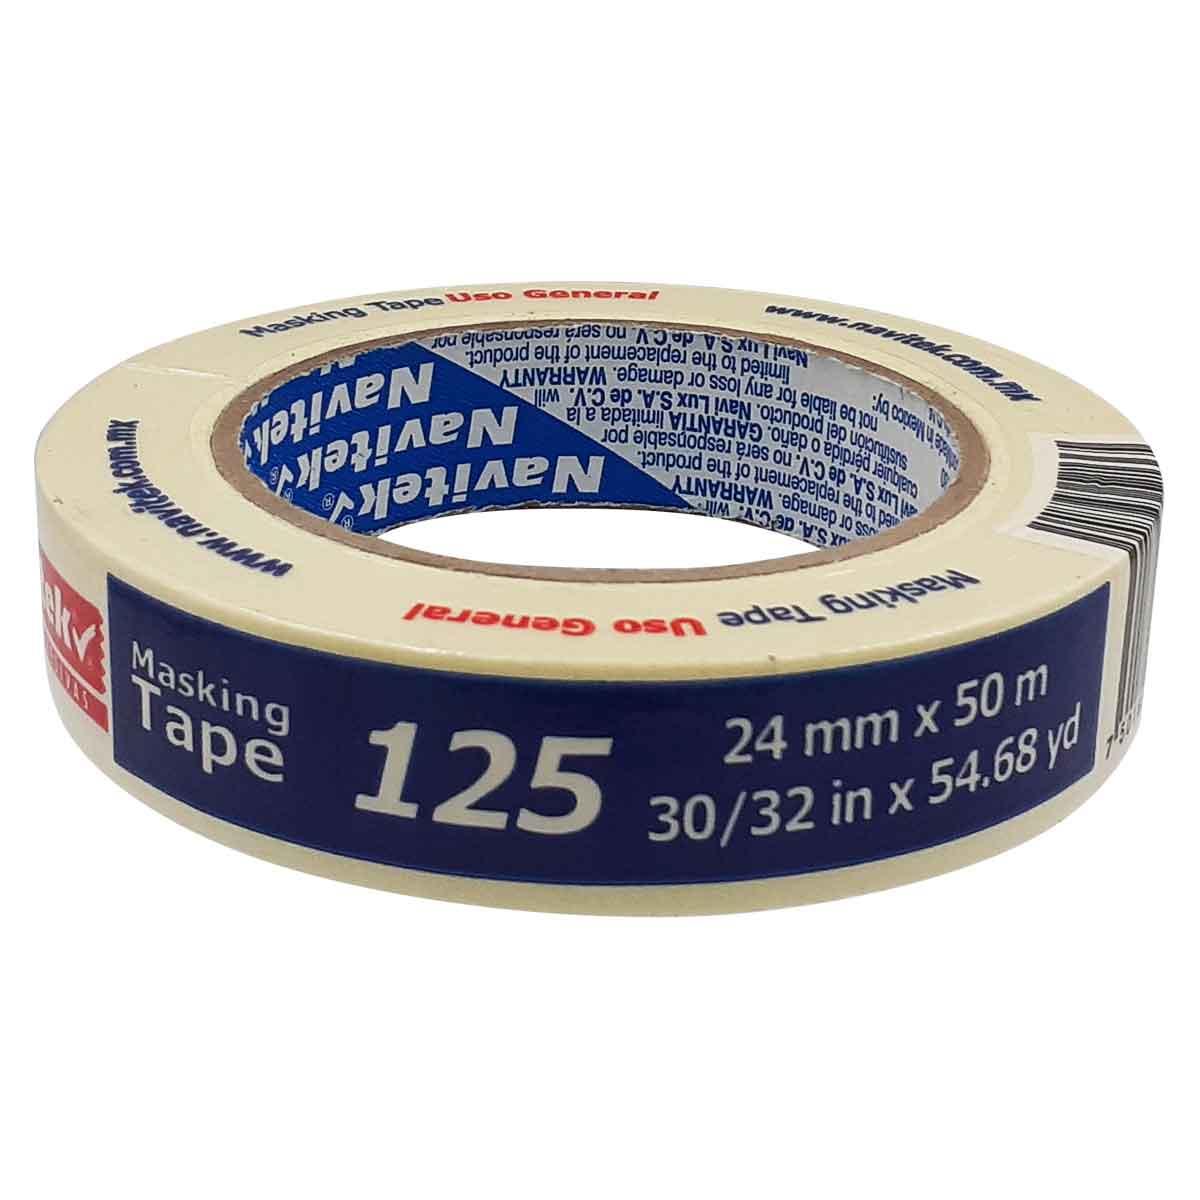 Masking tape NAvitek 24x50 #125 - Colmenero Shop